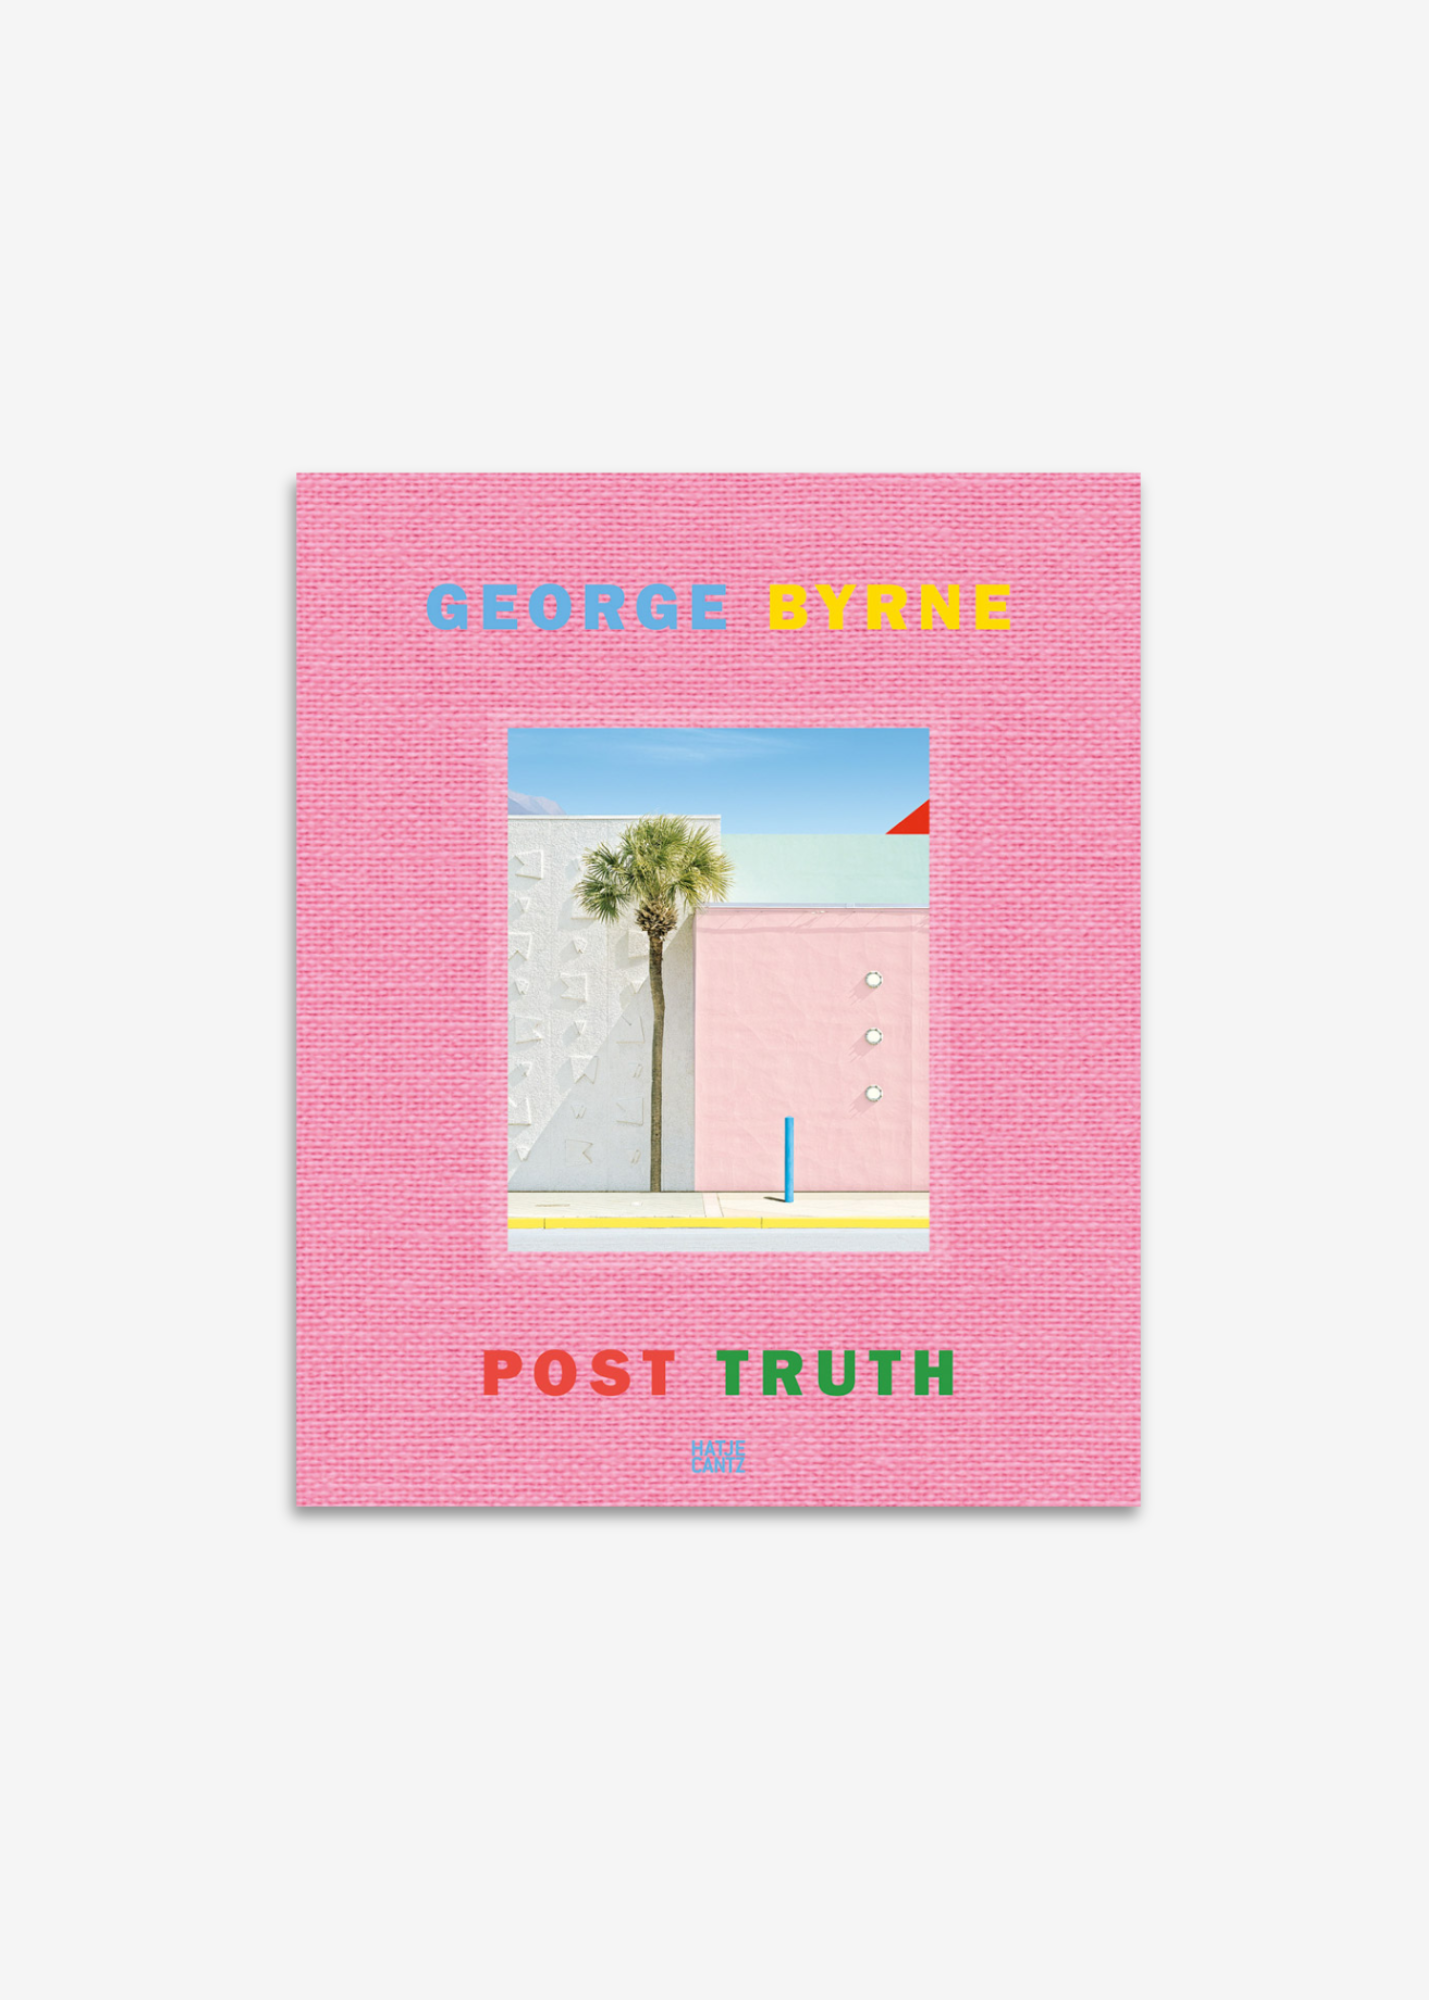 GEORGE BYRNE: POST TRUTH